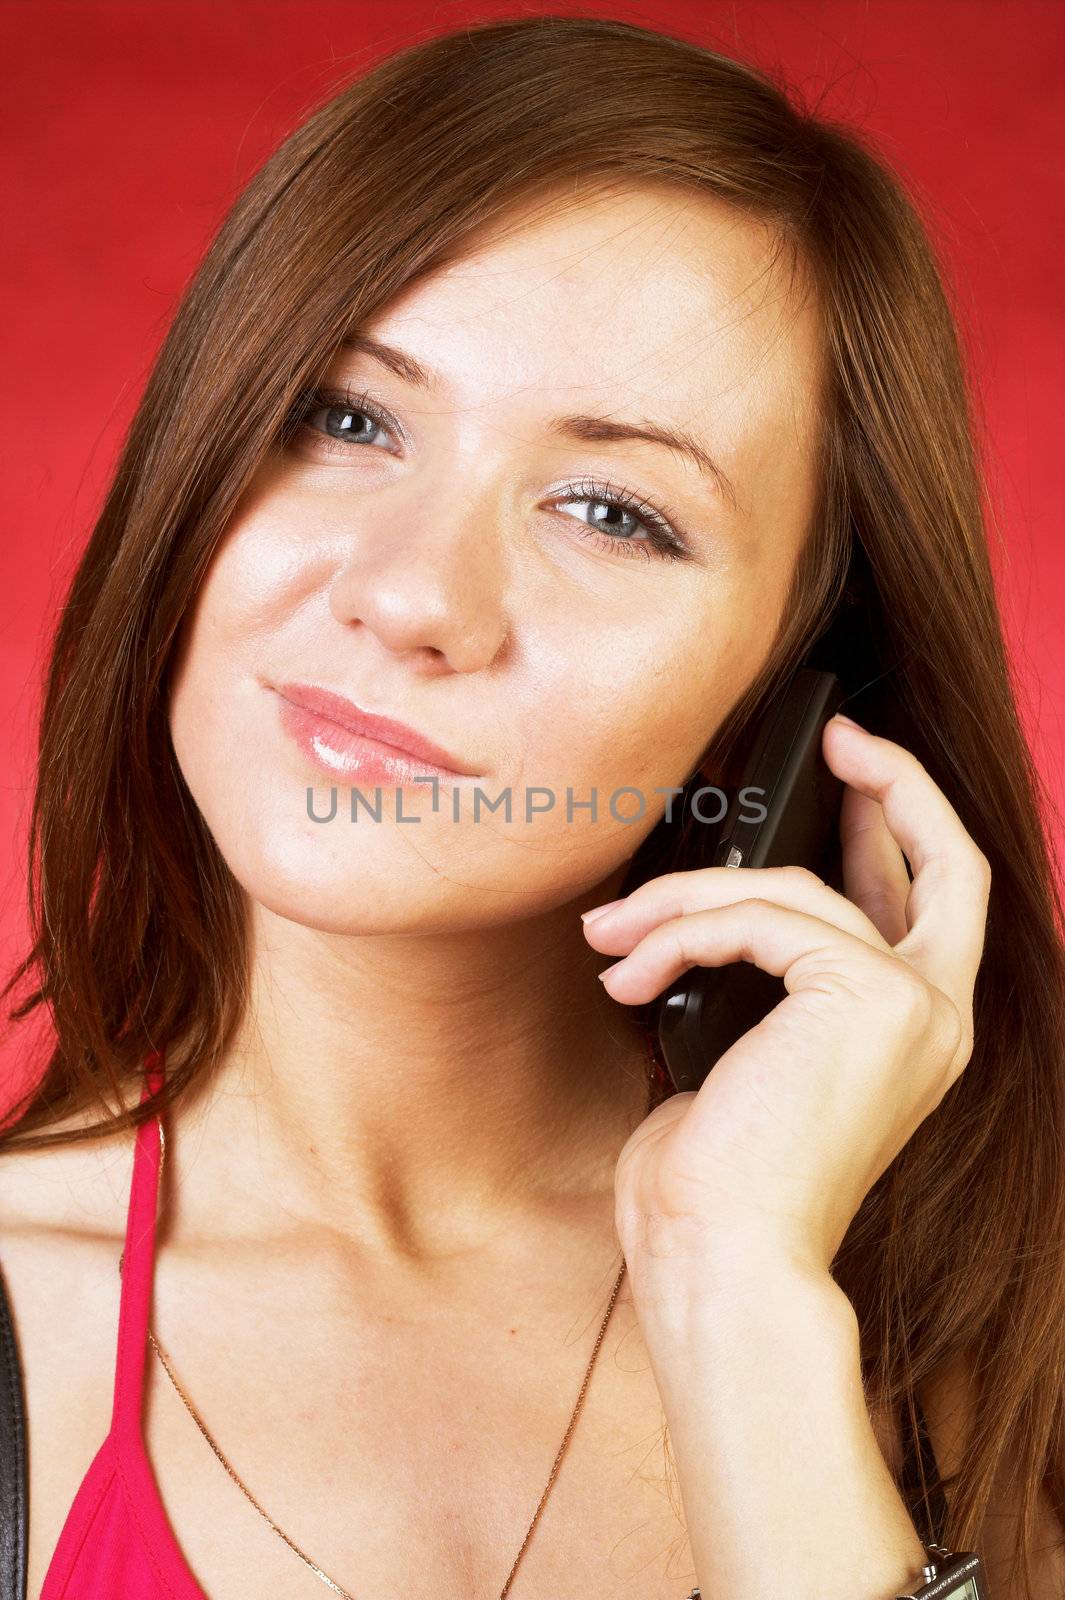 Woman on Phone

